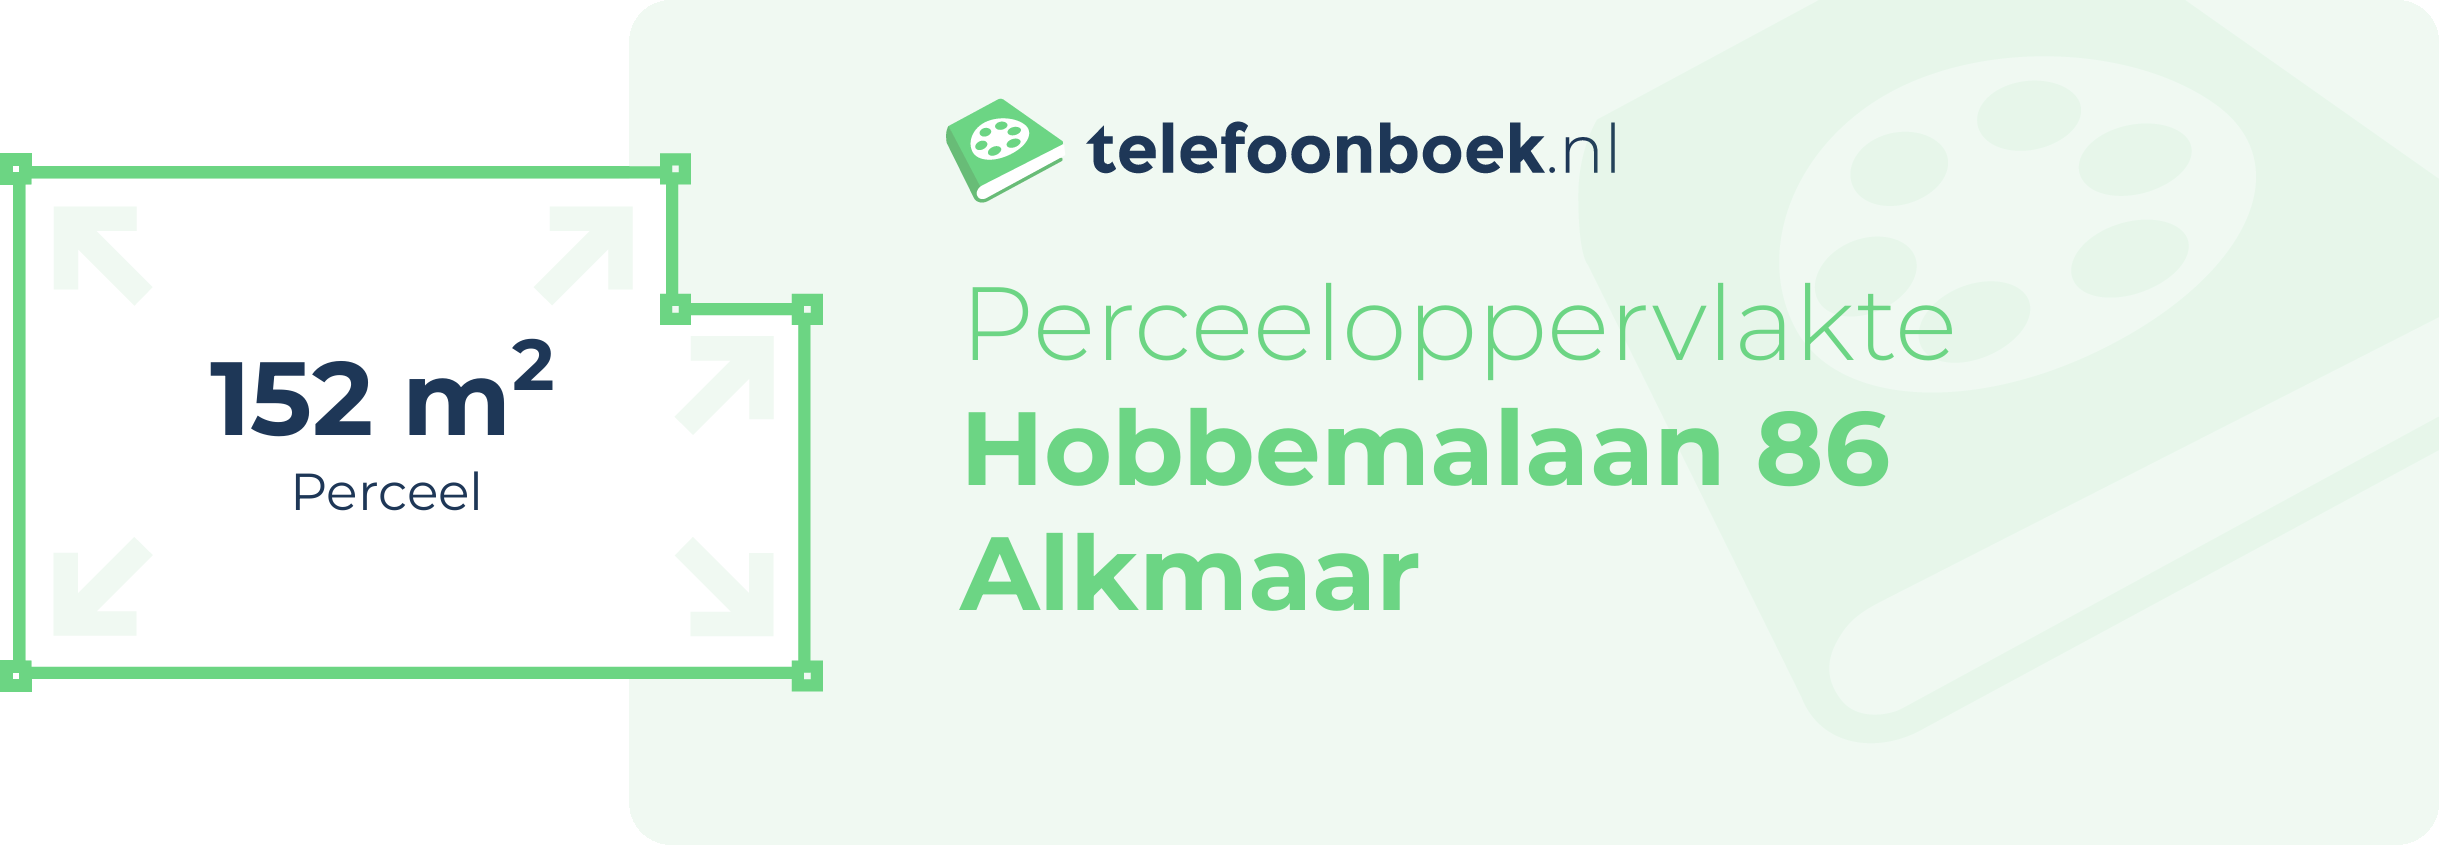 Perceeloppervlakte Hobbemalaan 86 Alkmaar